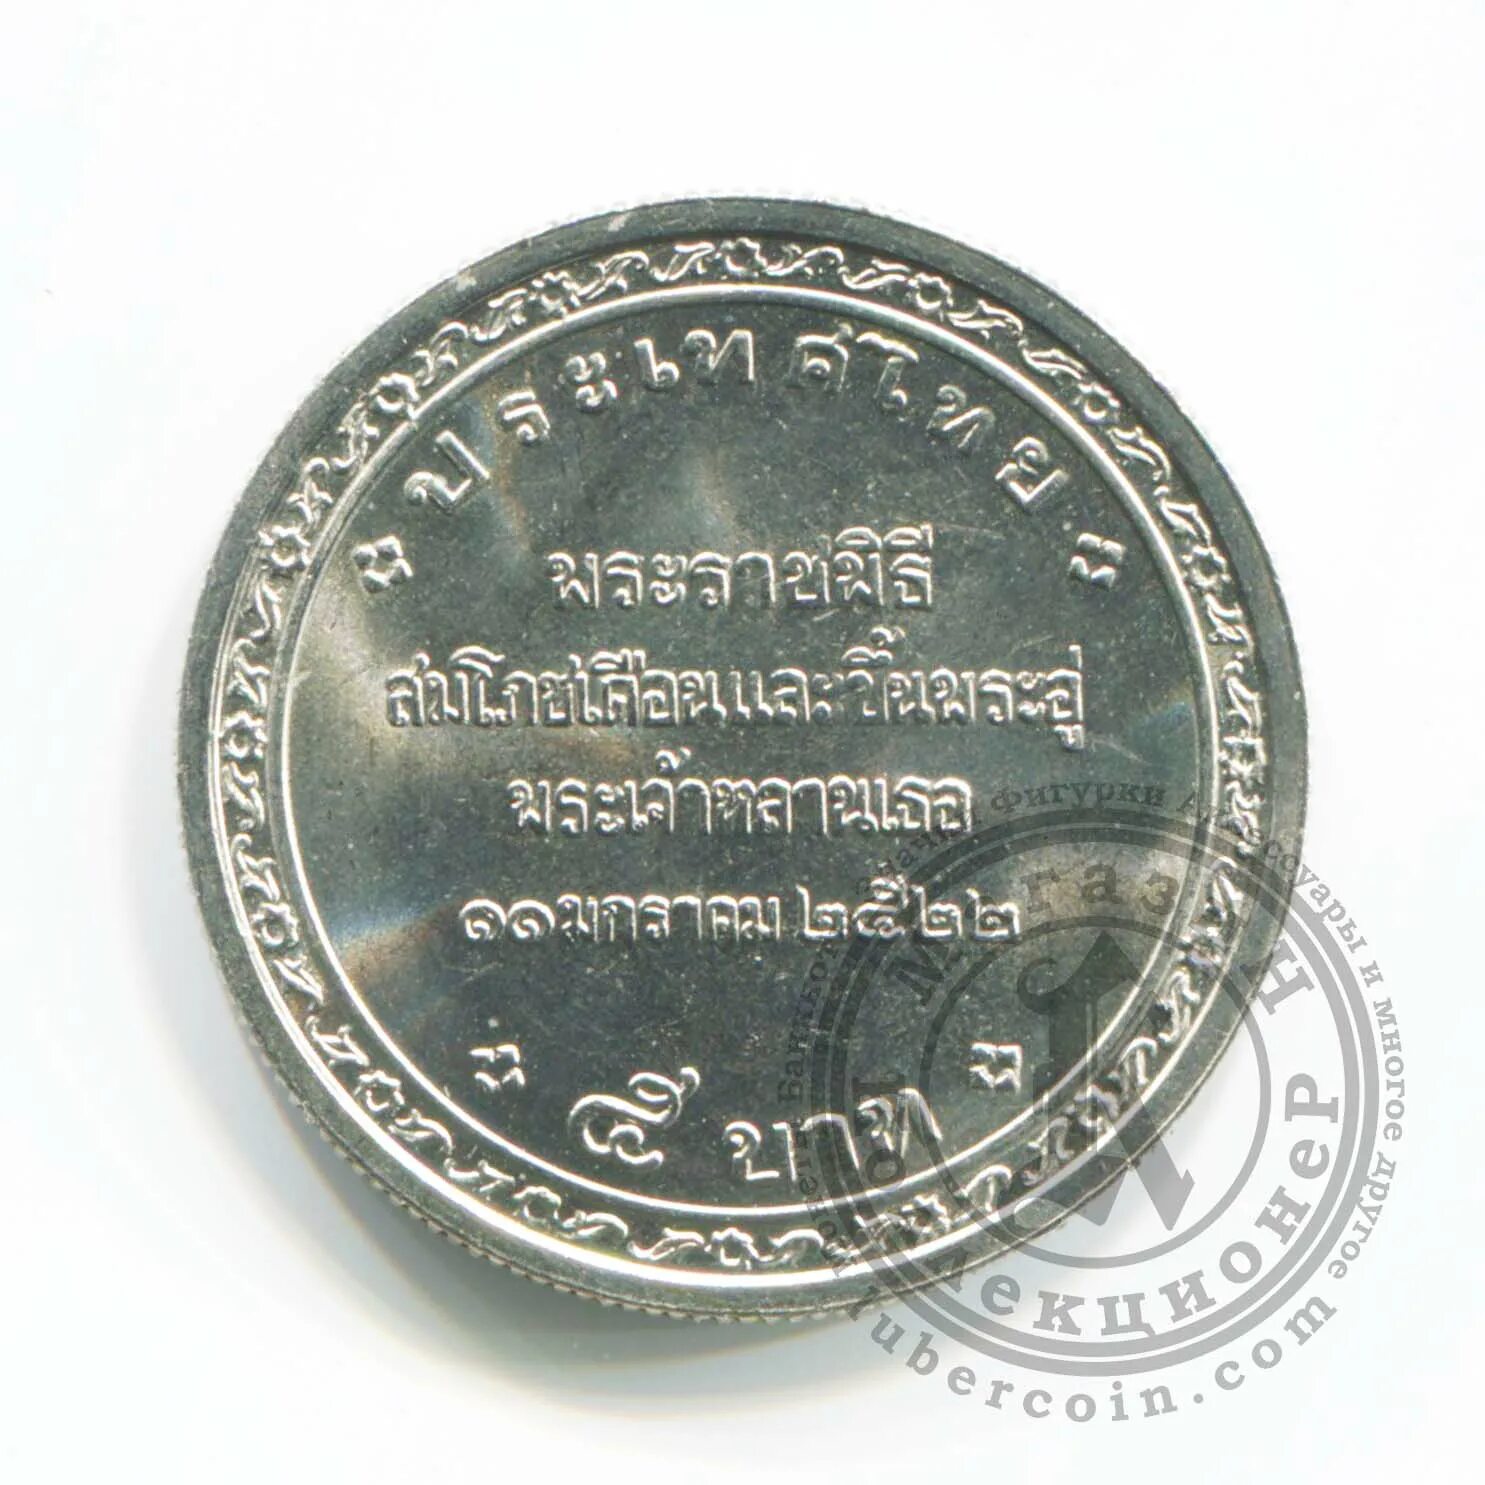 200 бат. Монеты Таиланда 5 бат 1979 Колыбельная церемония. Таиланд, 5 бат 1979 регулярная. 5 Бат - Таиланд - 2522 (1979) - Королевская Колыбельная церемония.